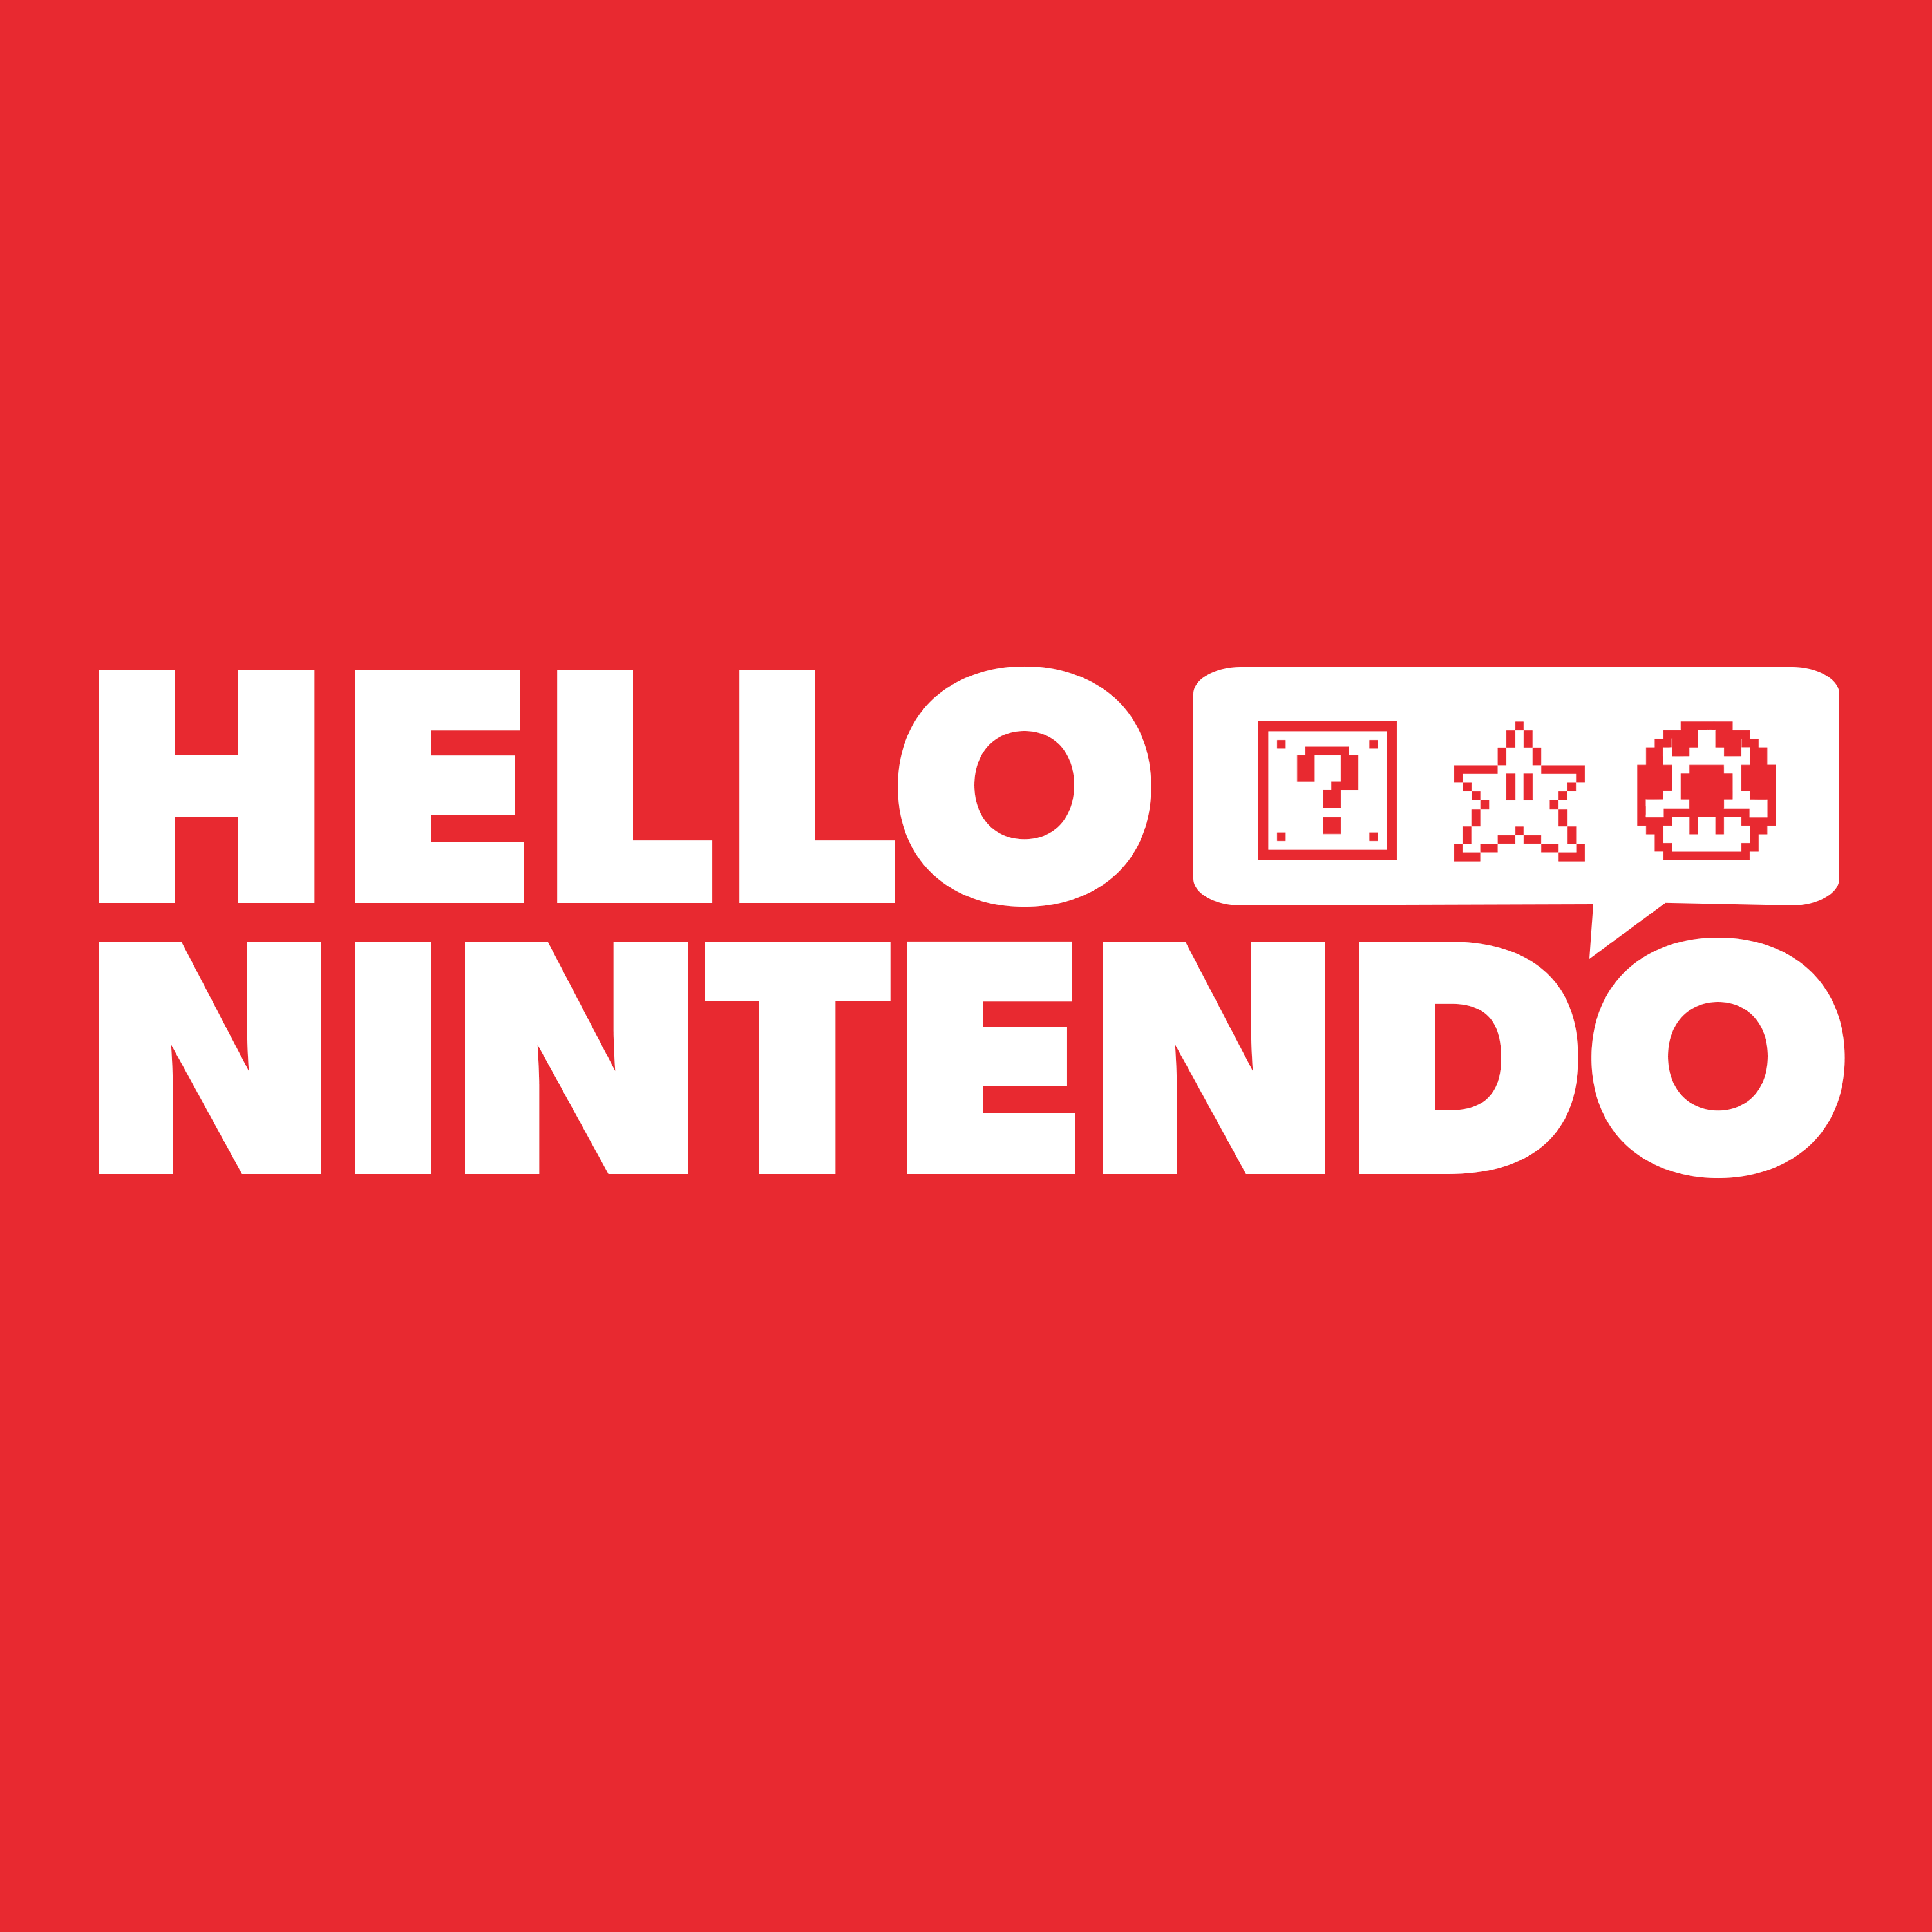 Hello nintendo. Nintendo hello.